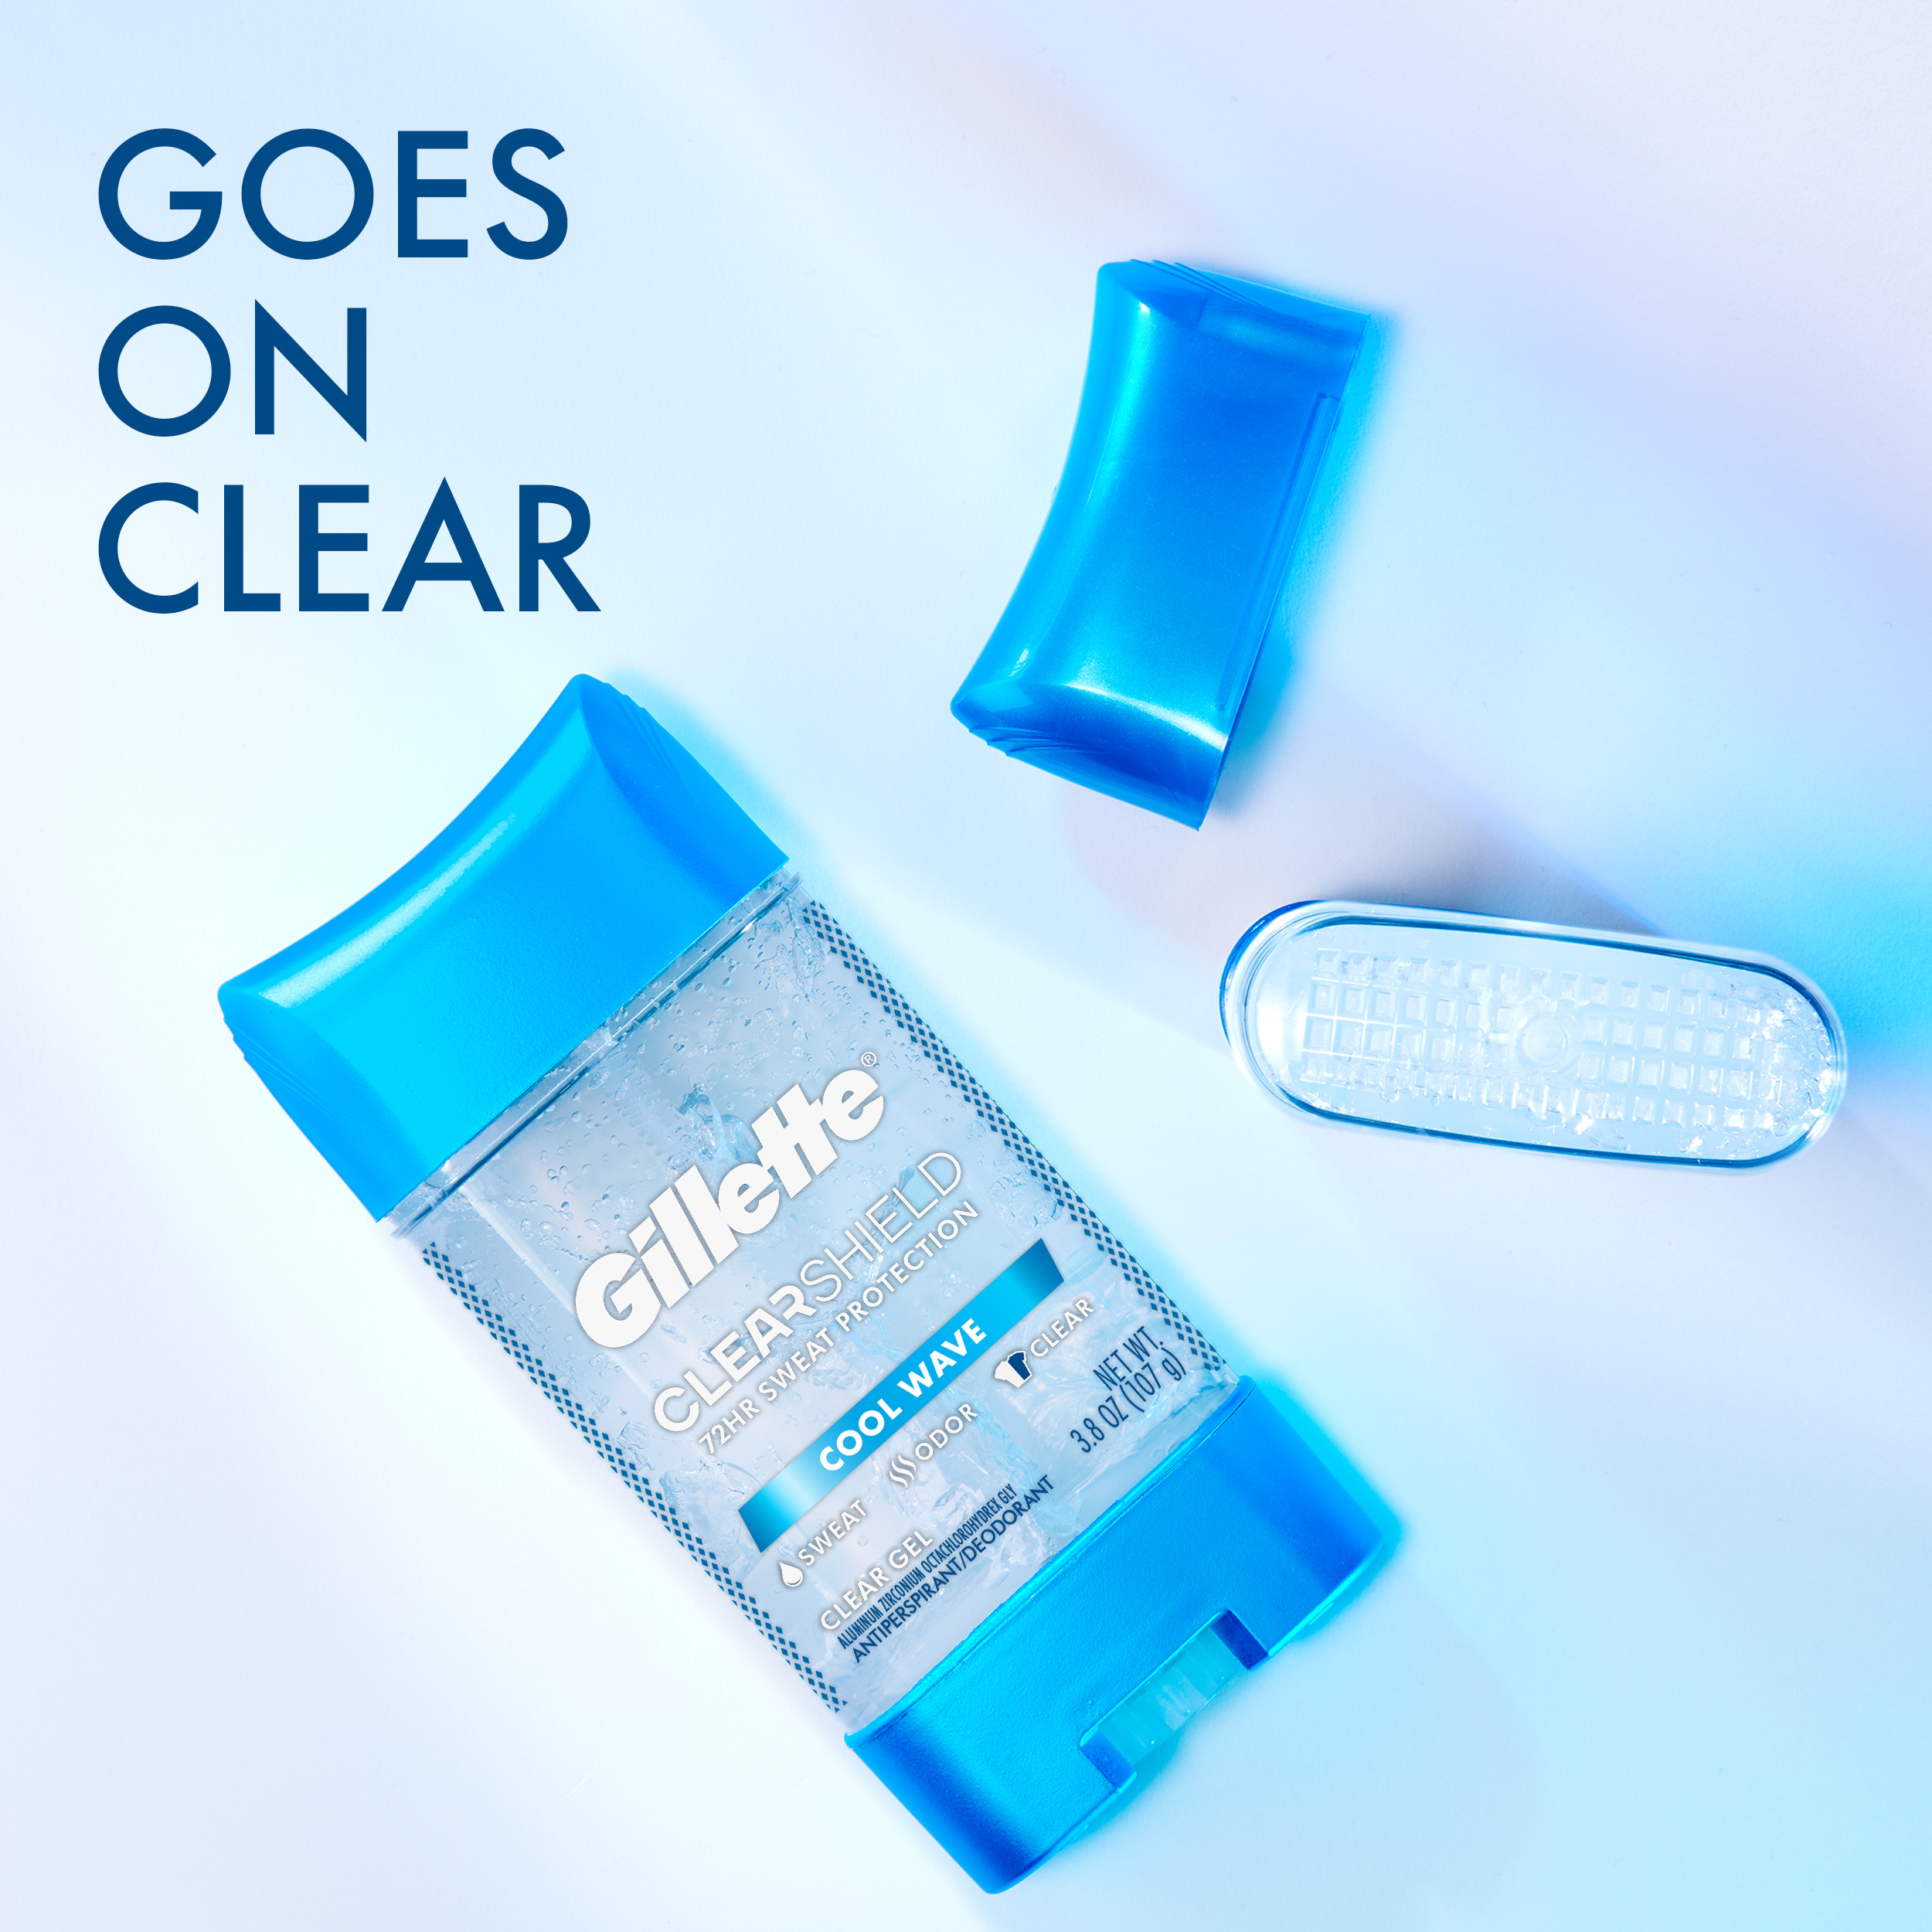 Gillette Antiperspirant Deodorant for Men, Clear Gel, Cool Wave, Twin Pack, 3.8oz - image 3 of 8